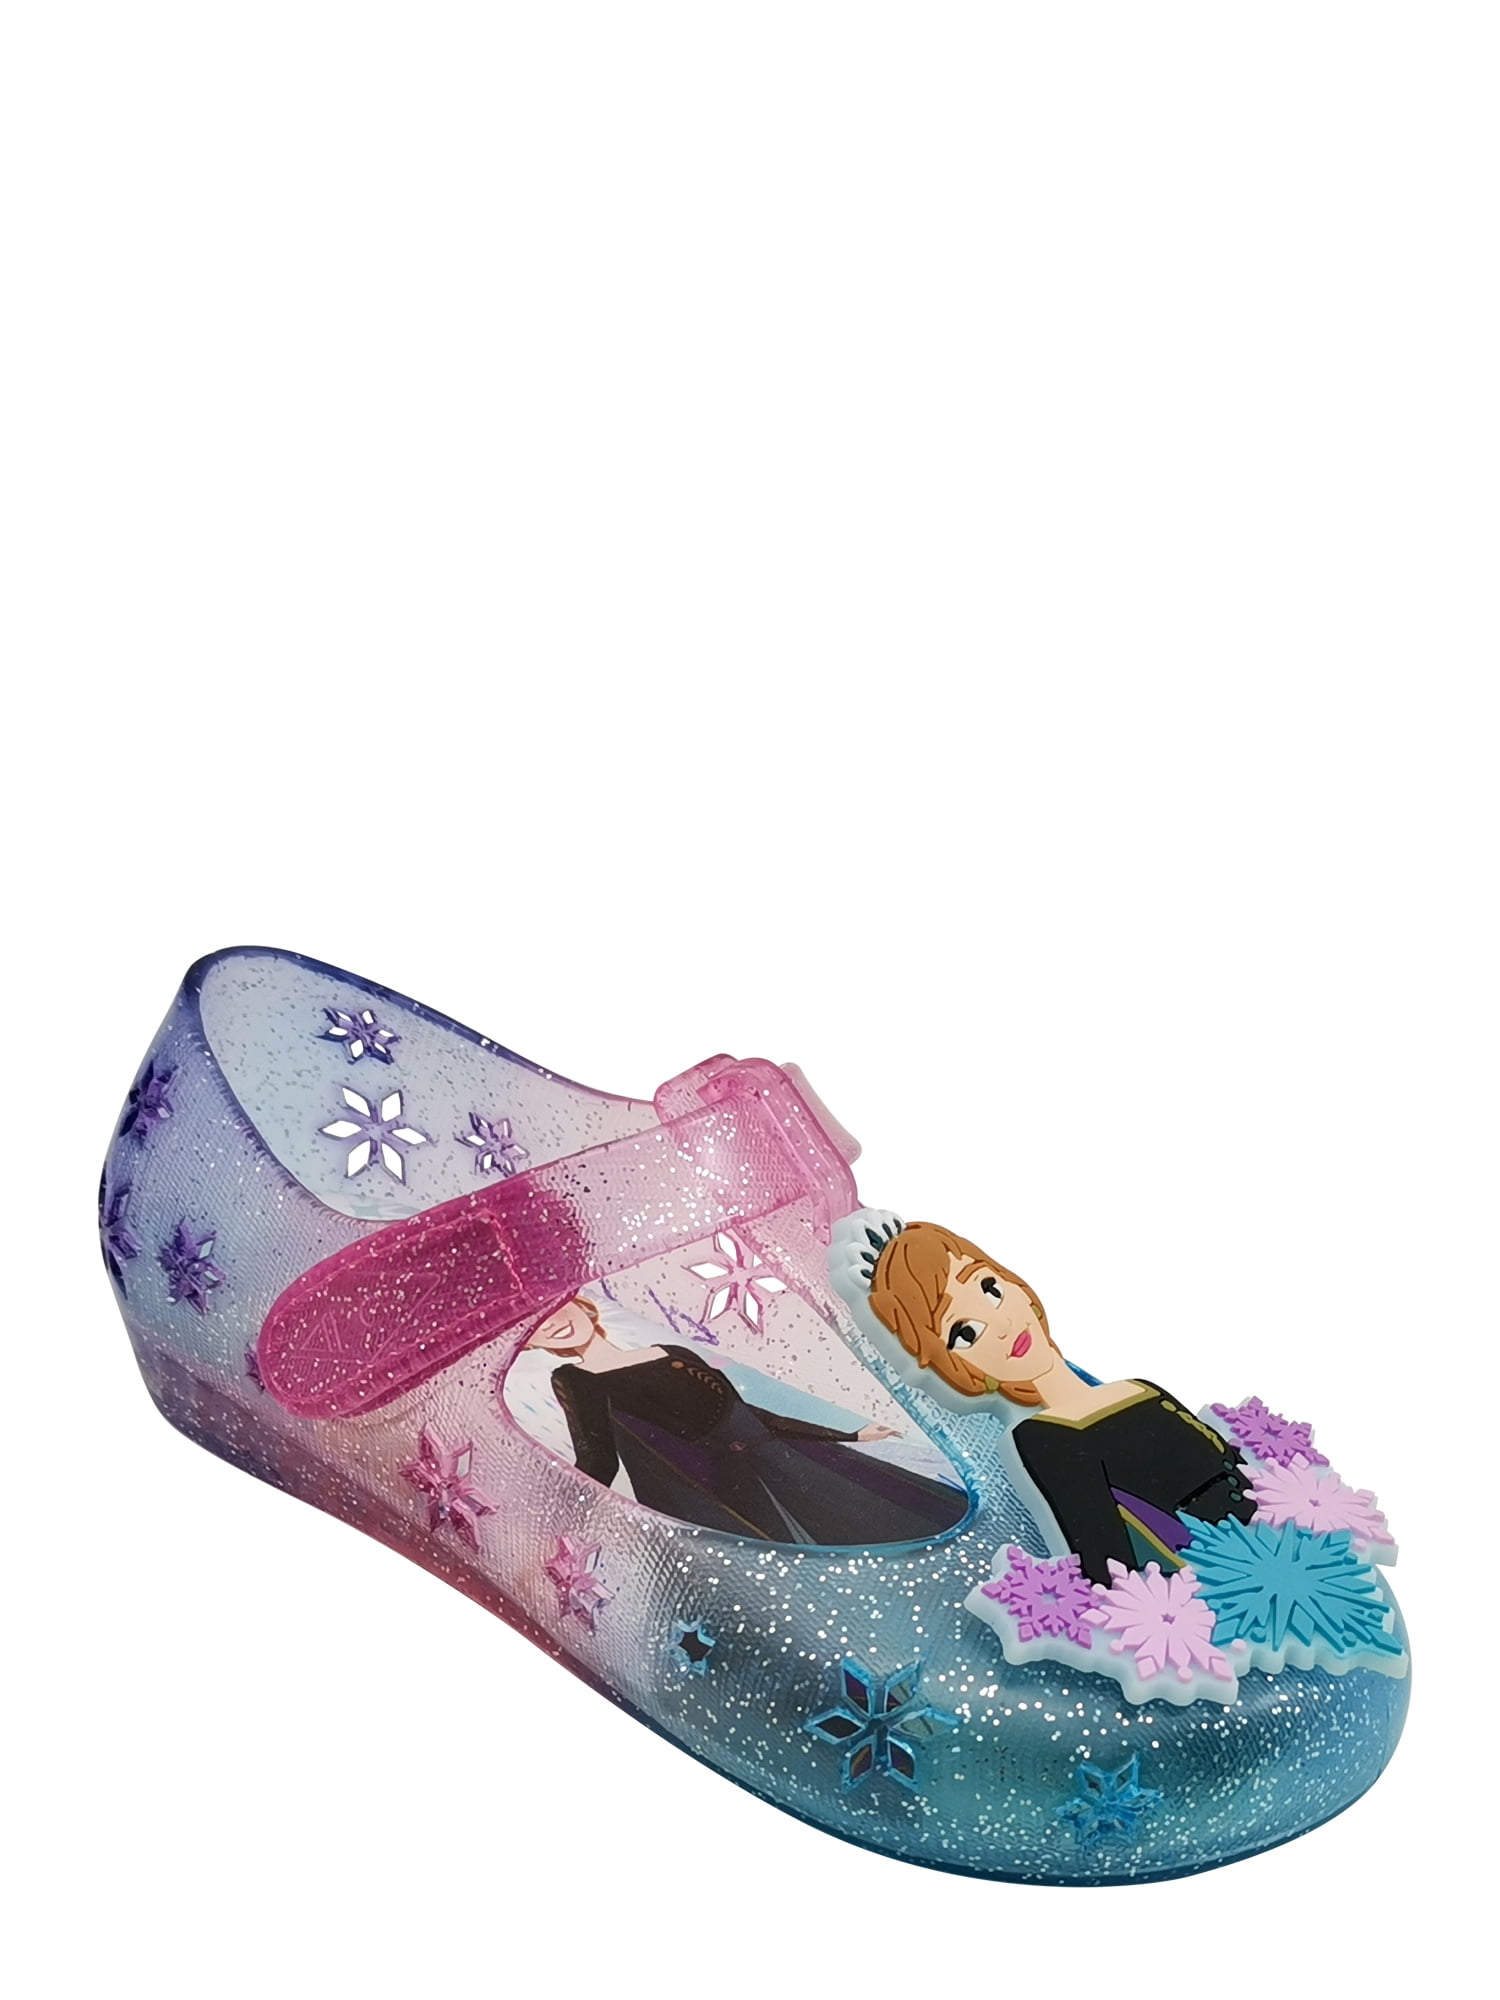 elsa jelly shoes